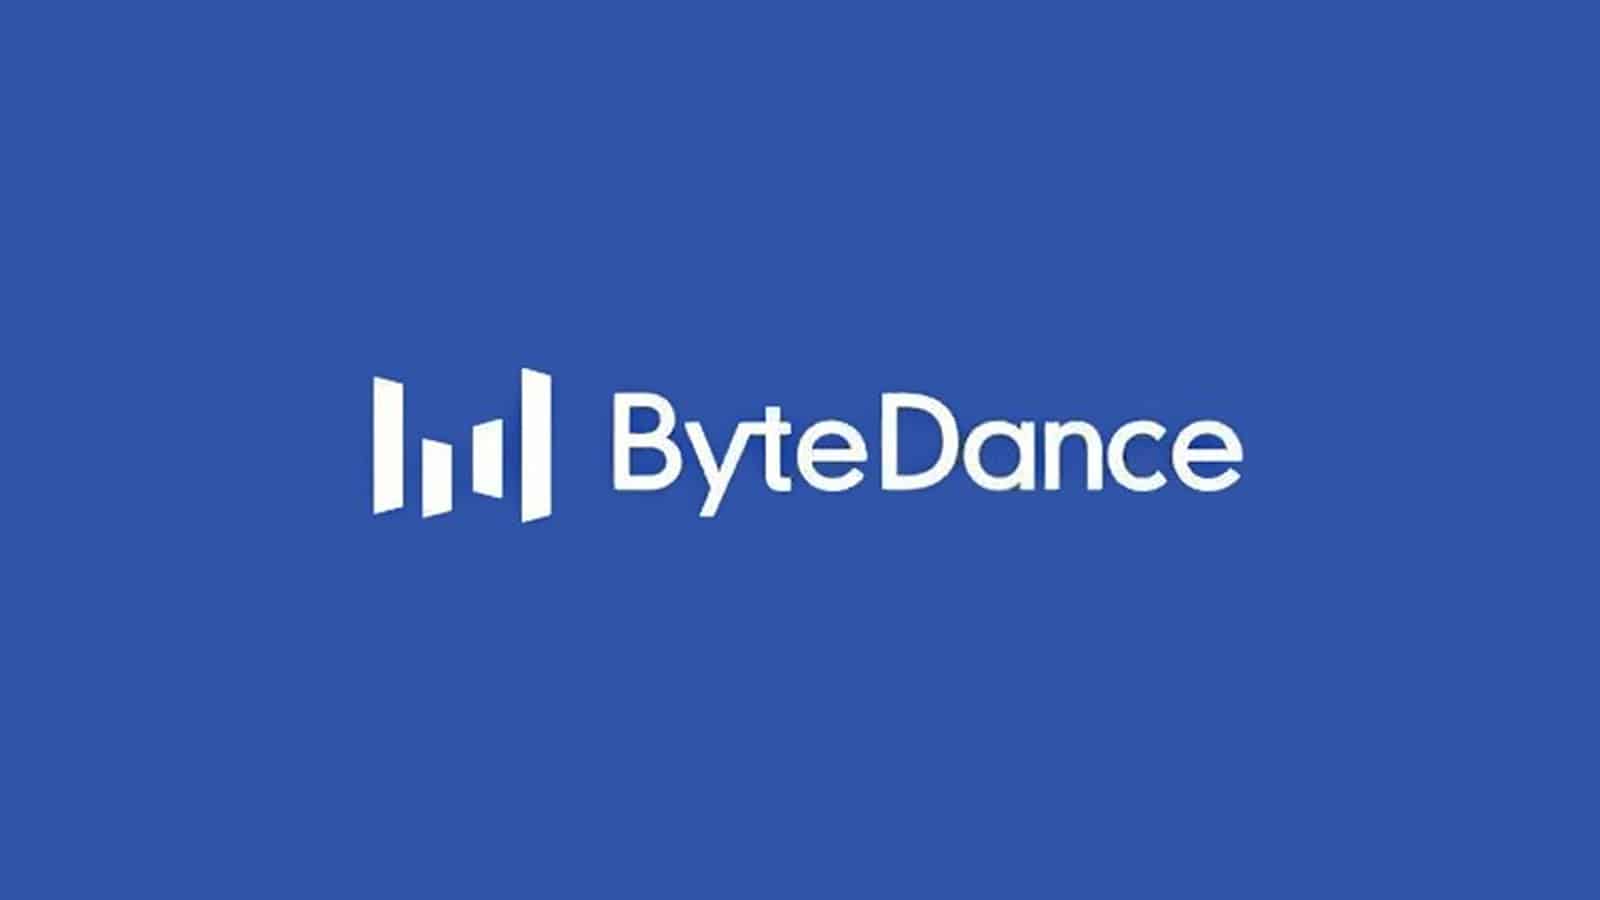 an image of bytedance